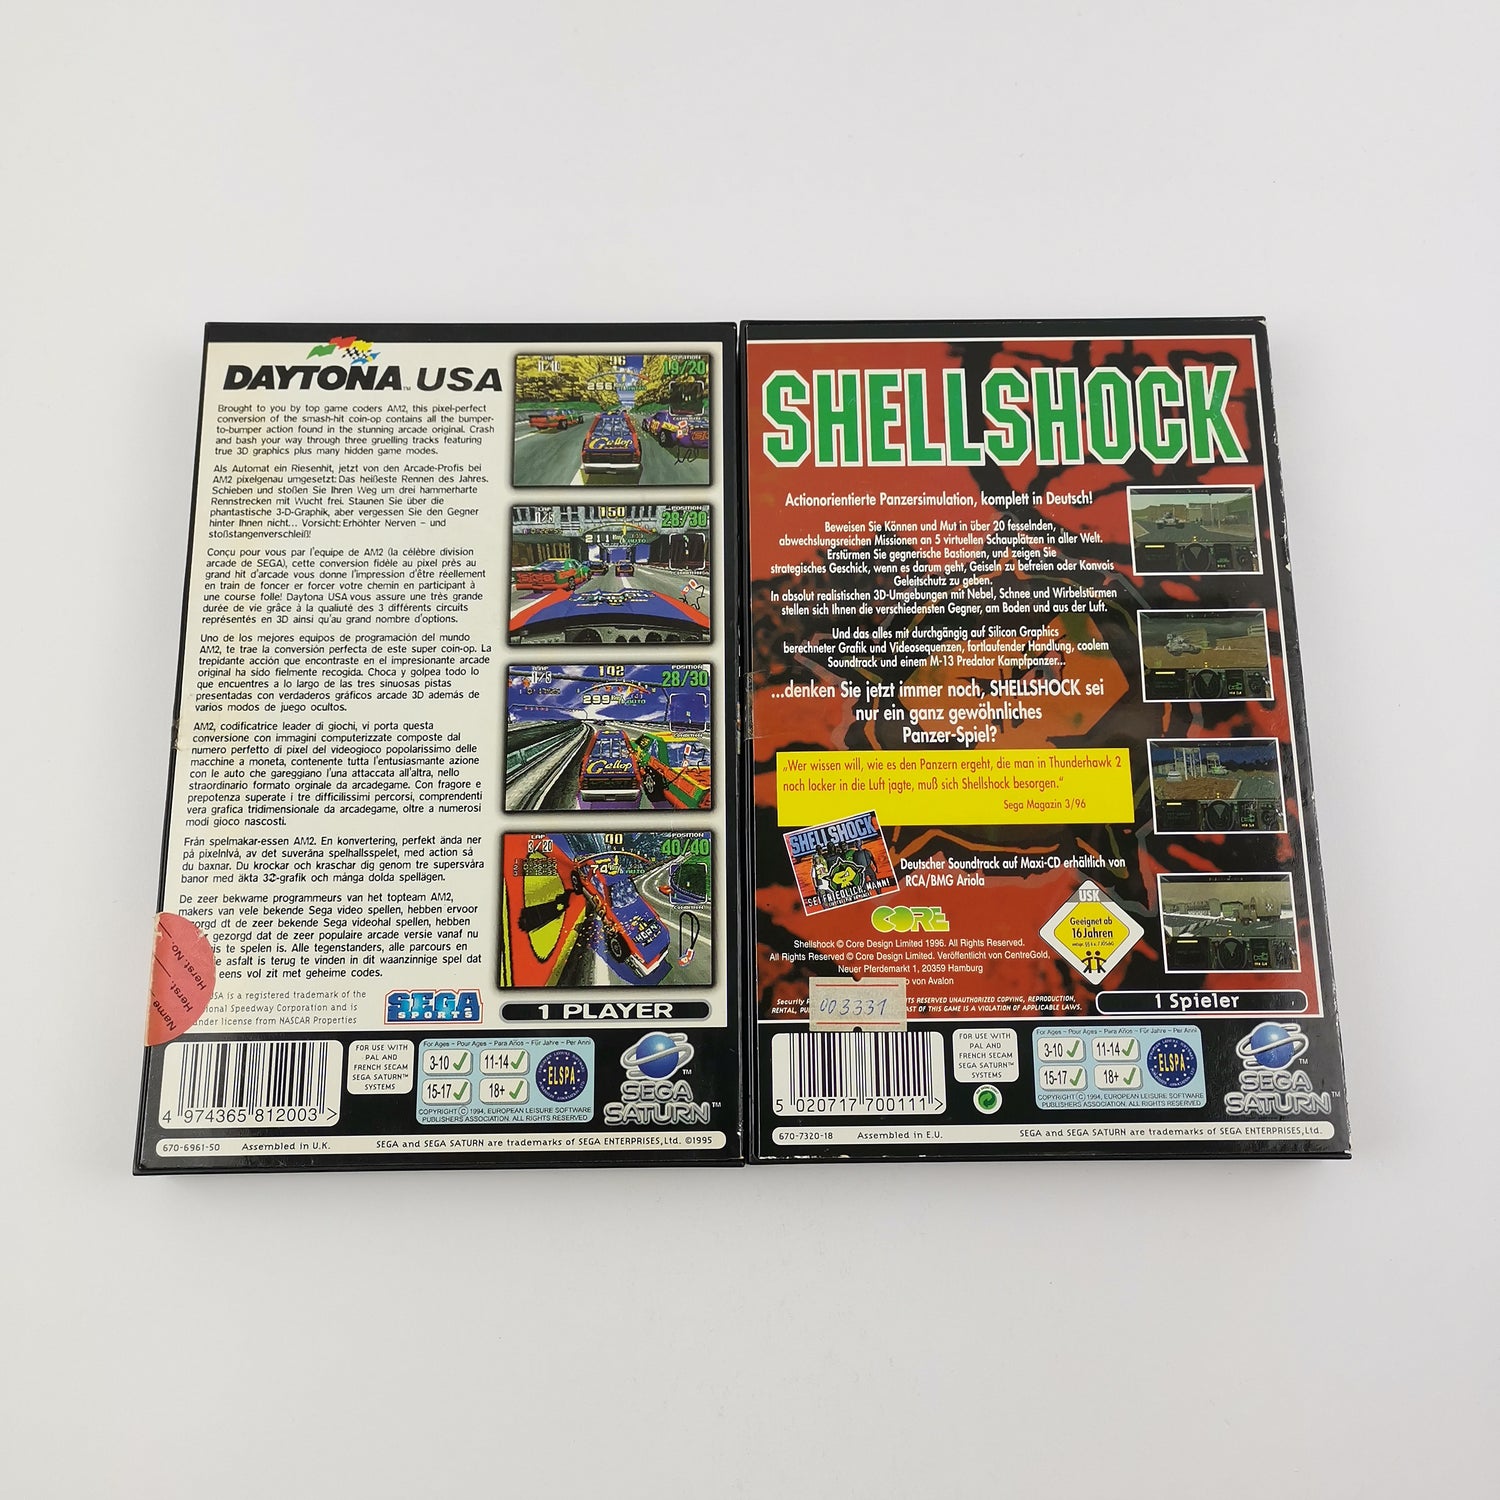 Sega Saturn Spiele : Shellshock + Daytona USA - OVP & Anleitung PAL Bundle